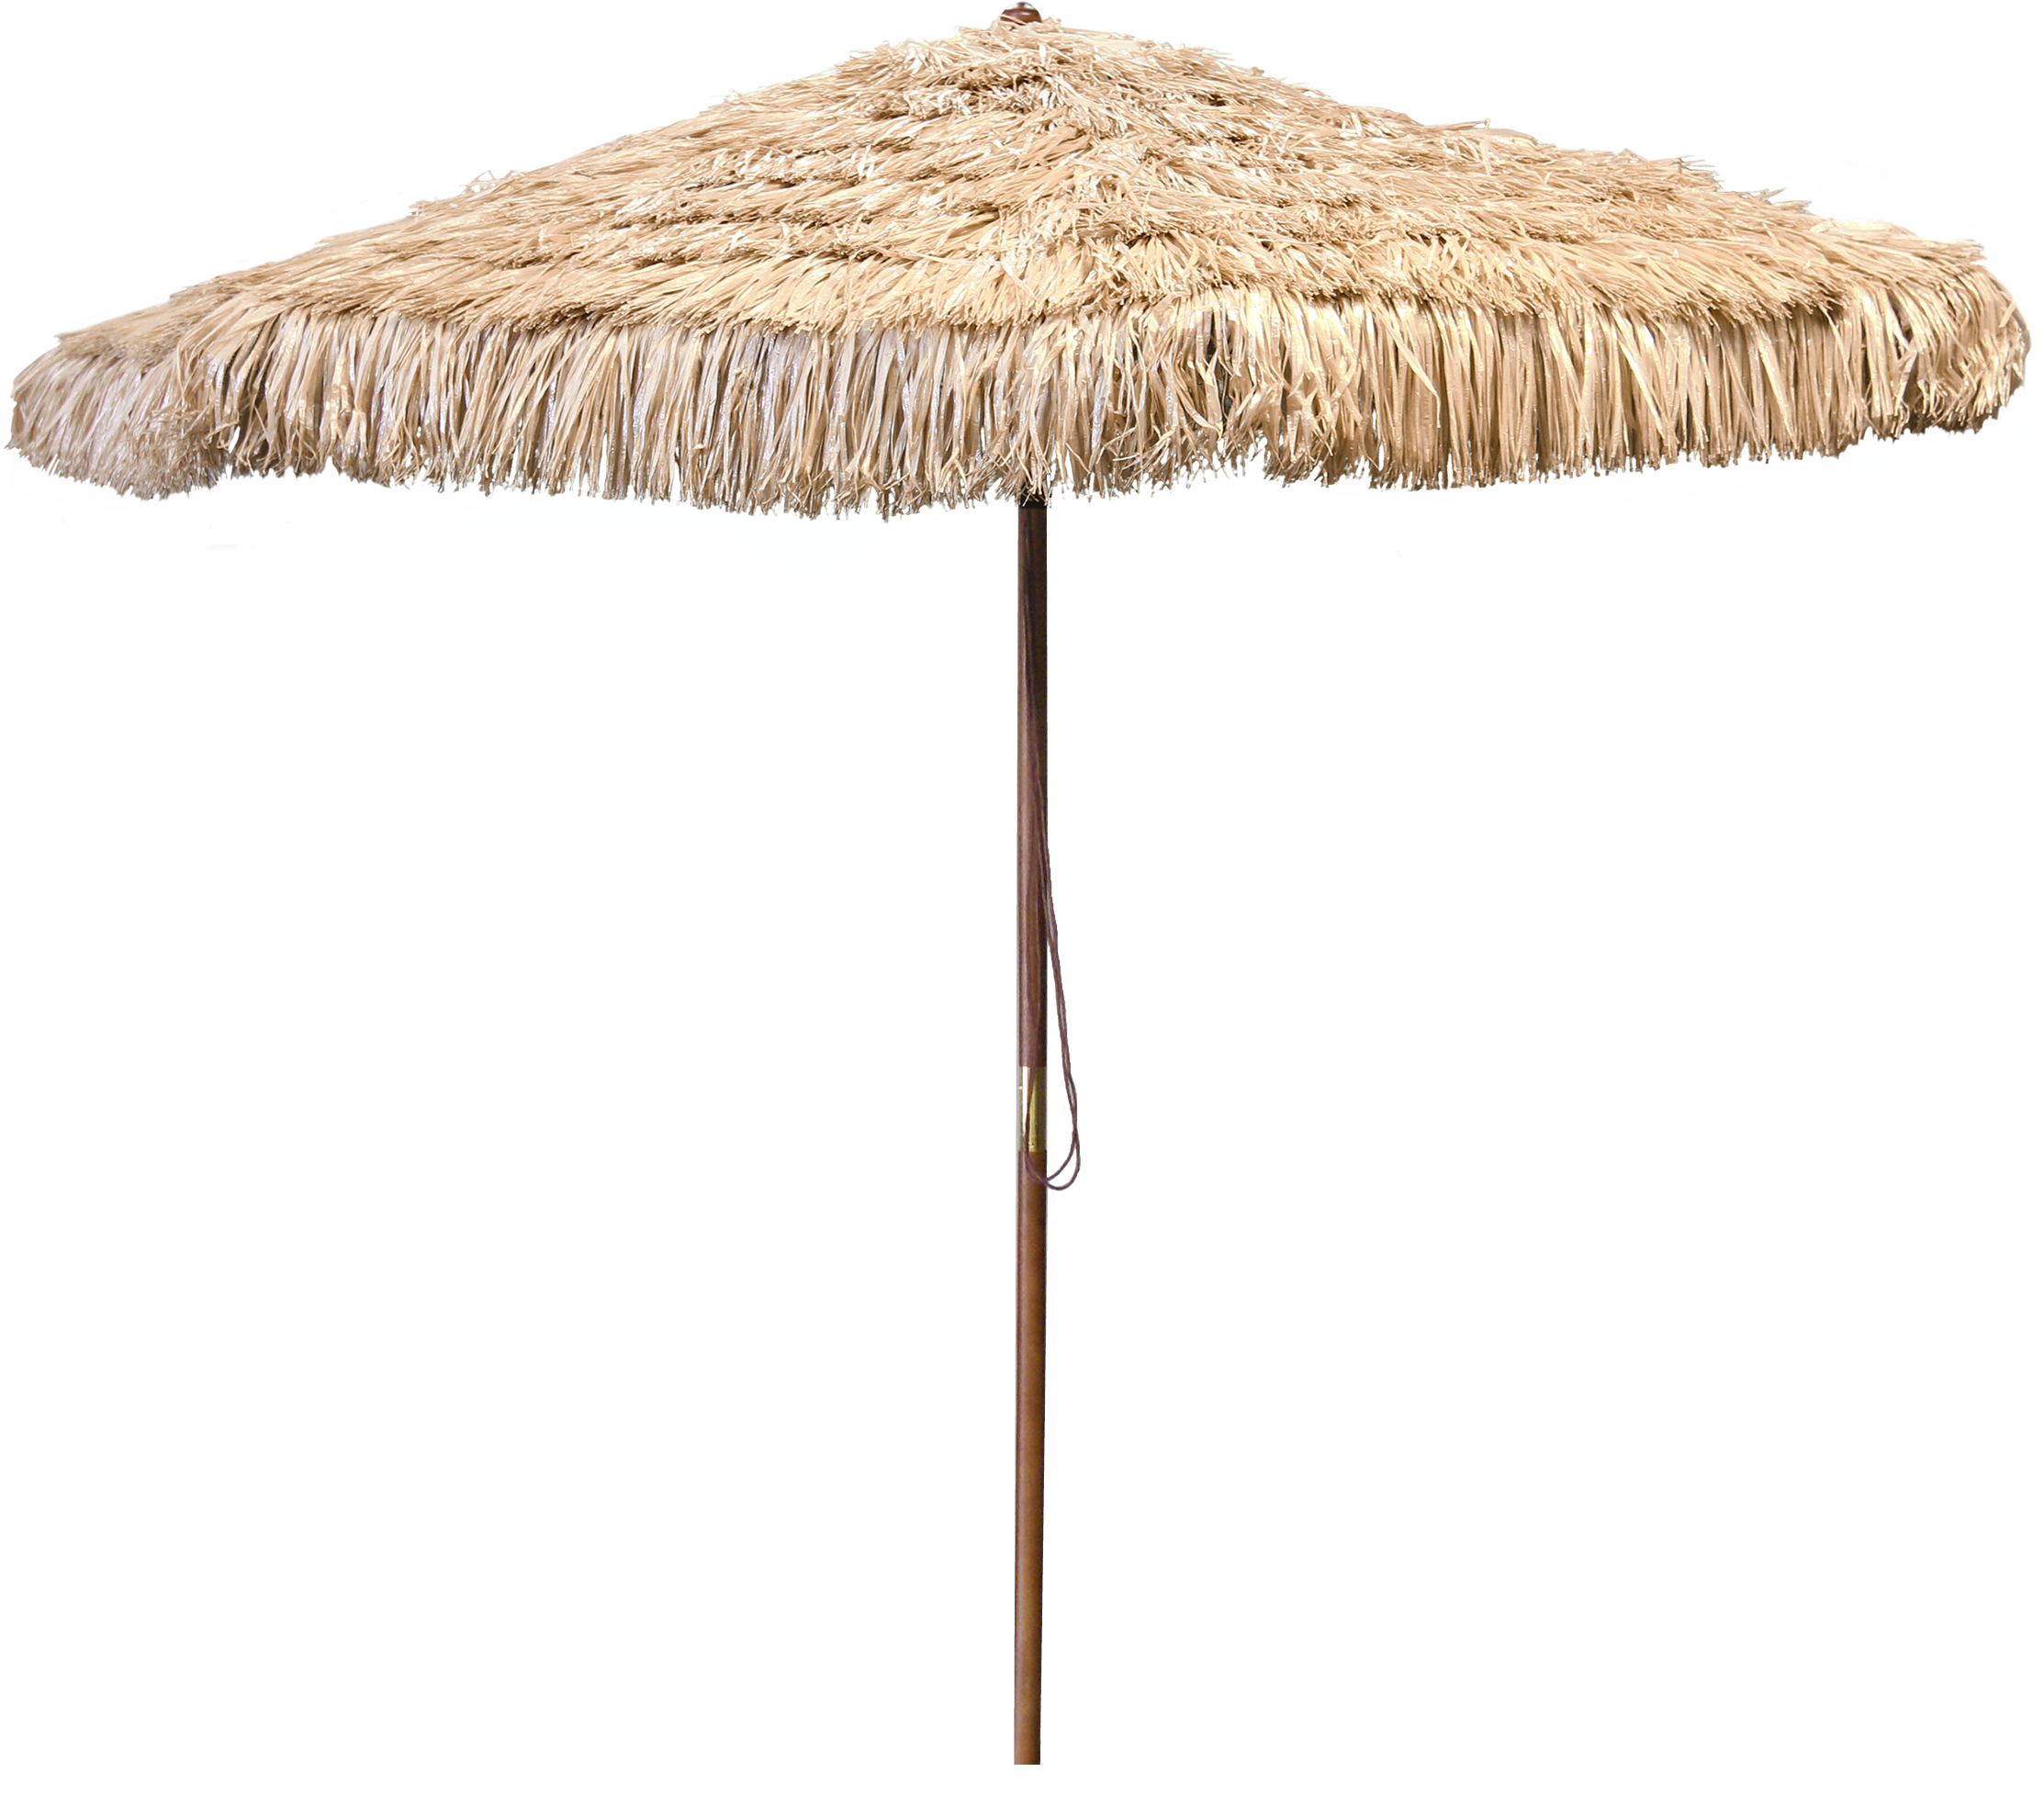 9' Hula Patio Umbrella